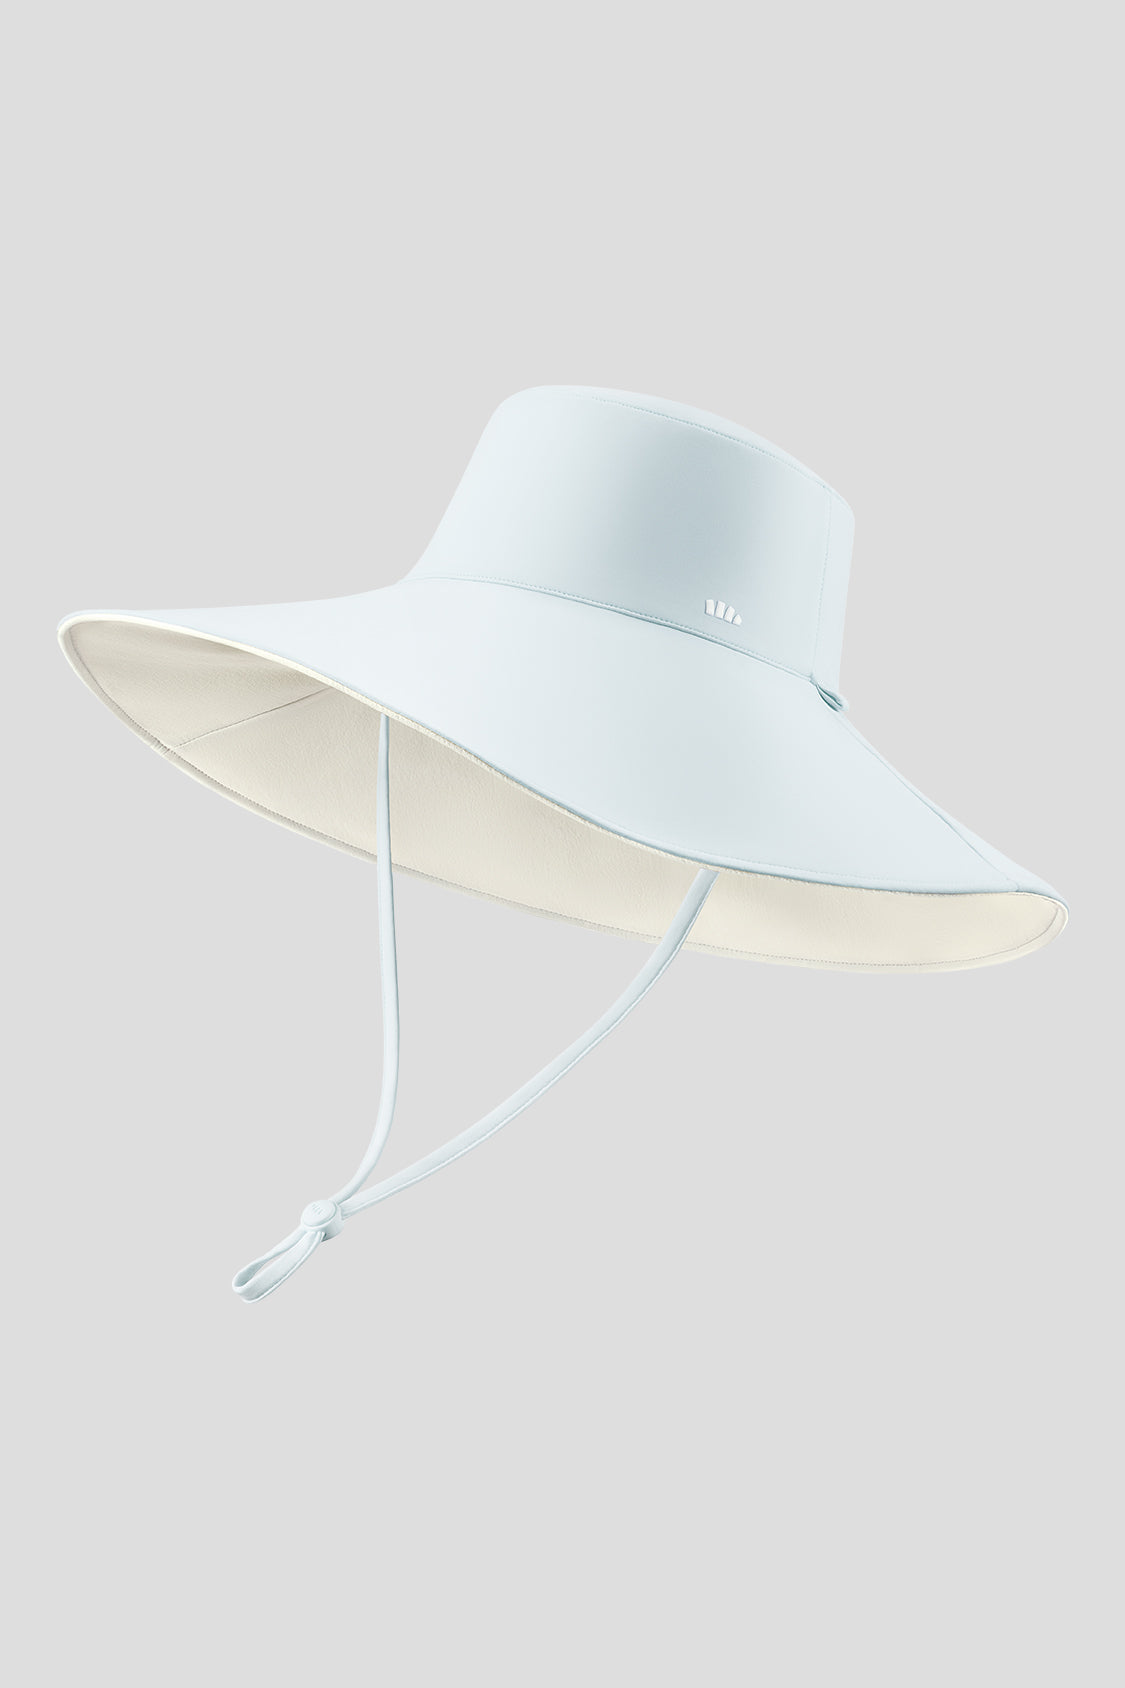 beneunder women's sun hats upf50+ #color_sand cloud white - white